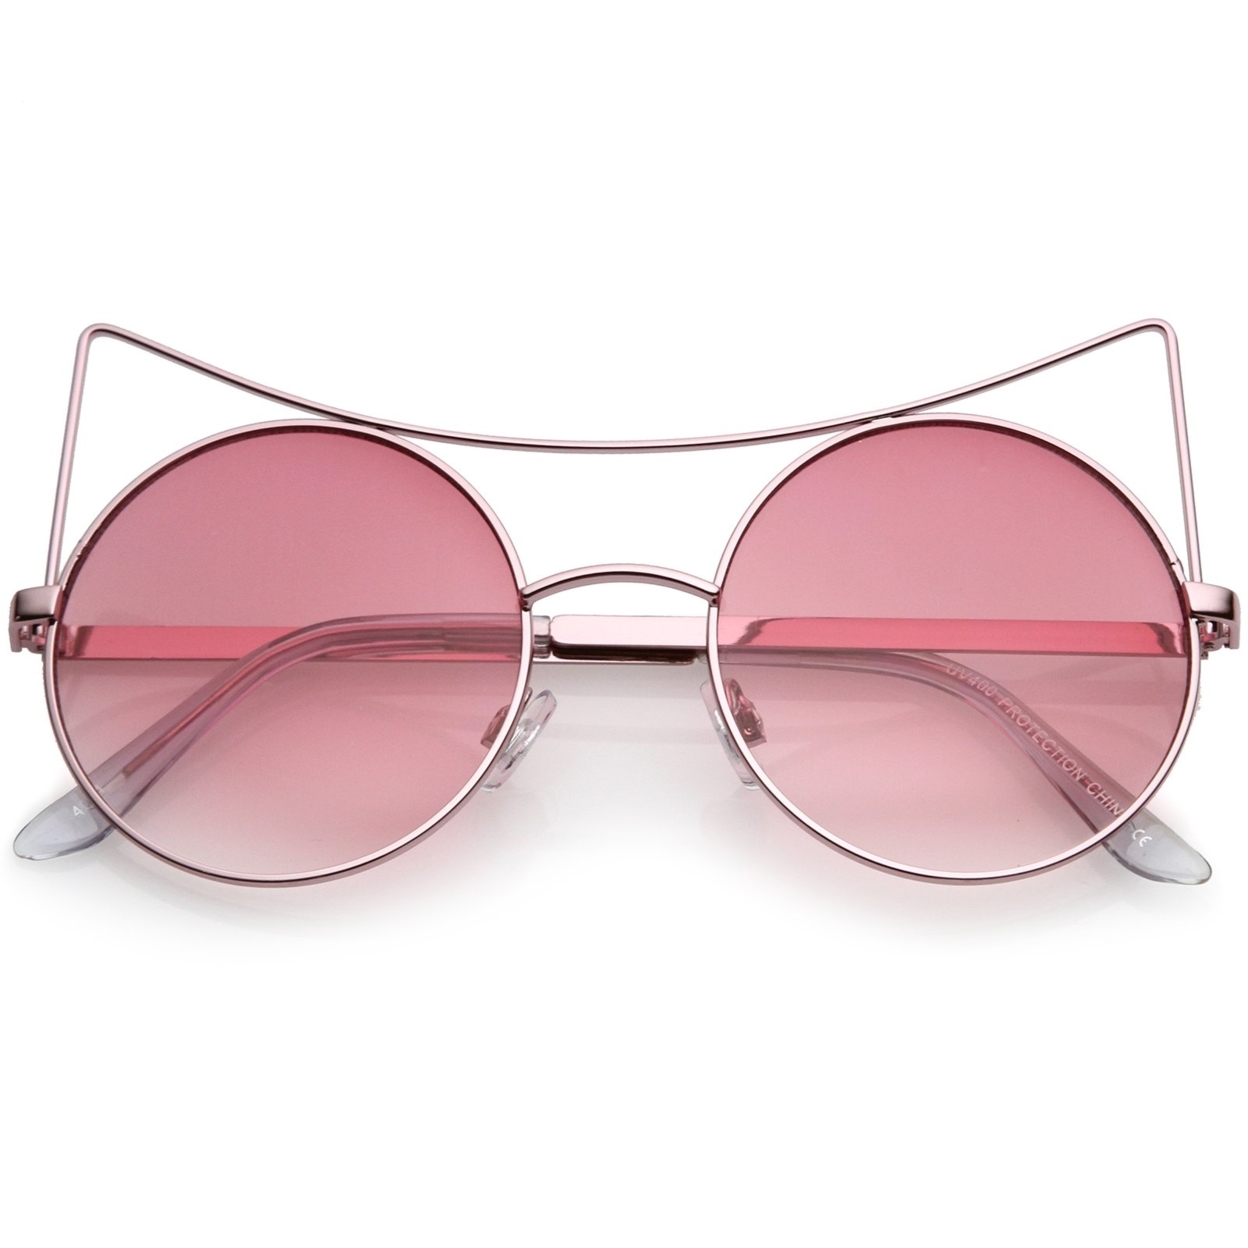 Women's Oversize Open Metal Gradient Round Flat Lens Cat Eye Sunglasses 54mm - Gold / Amber